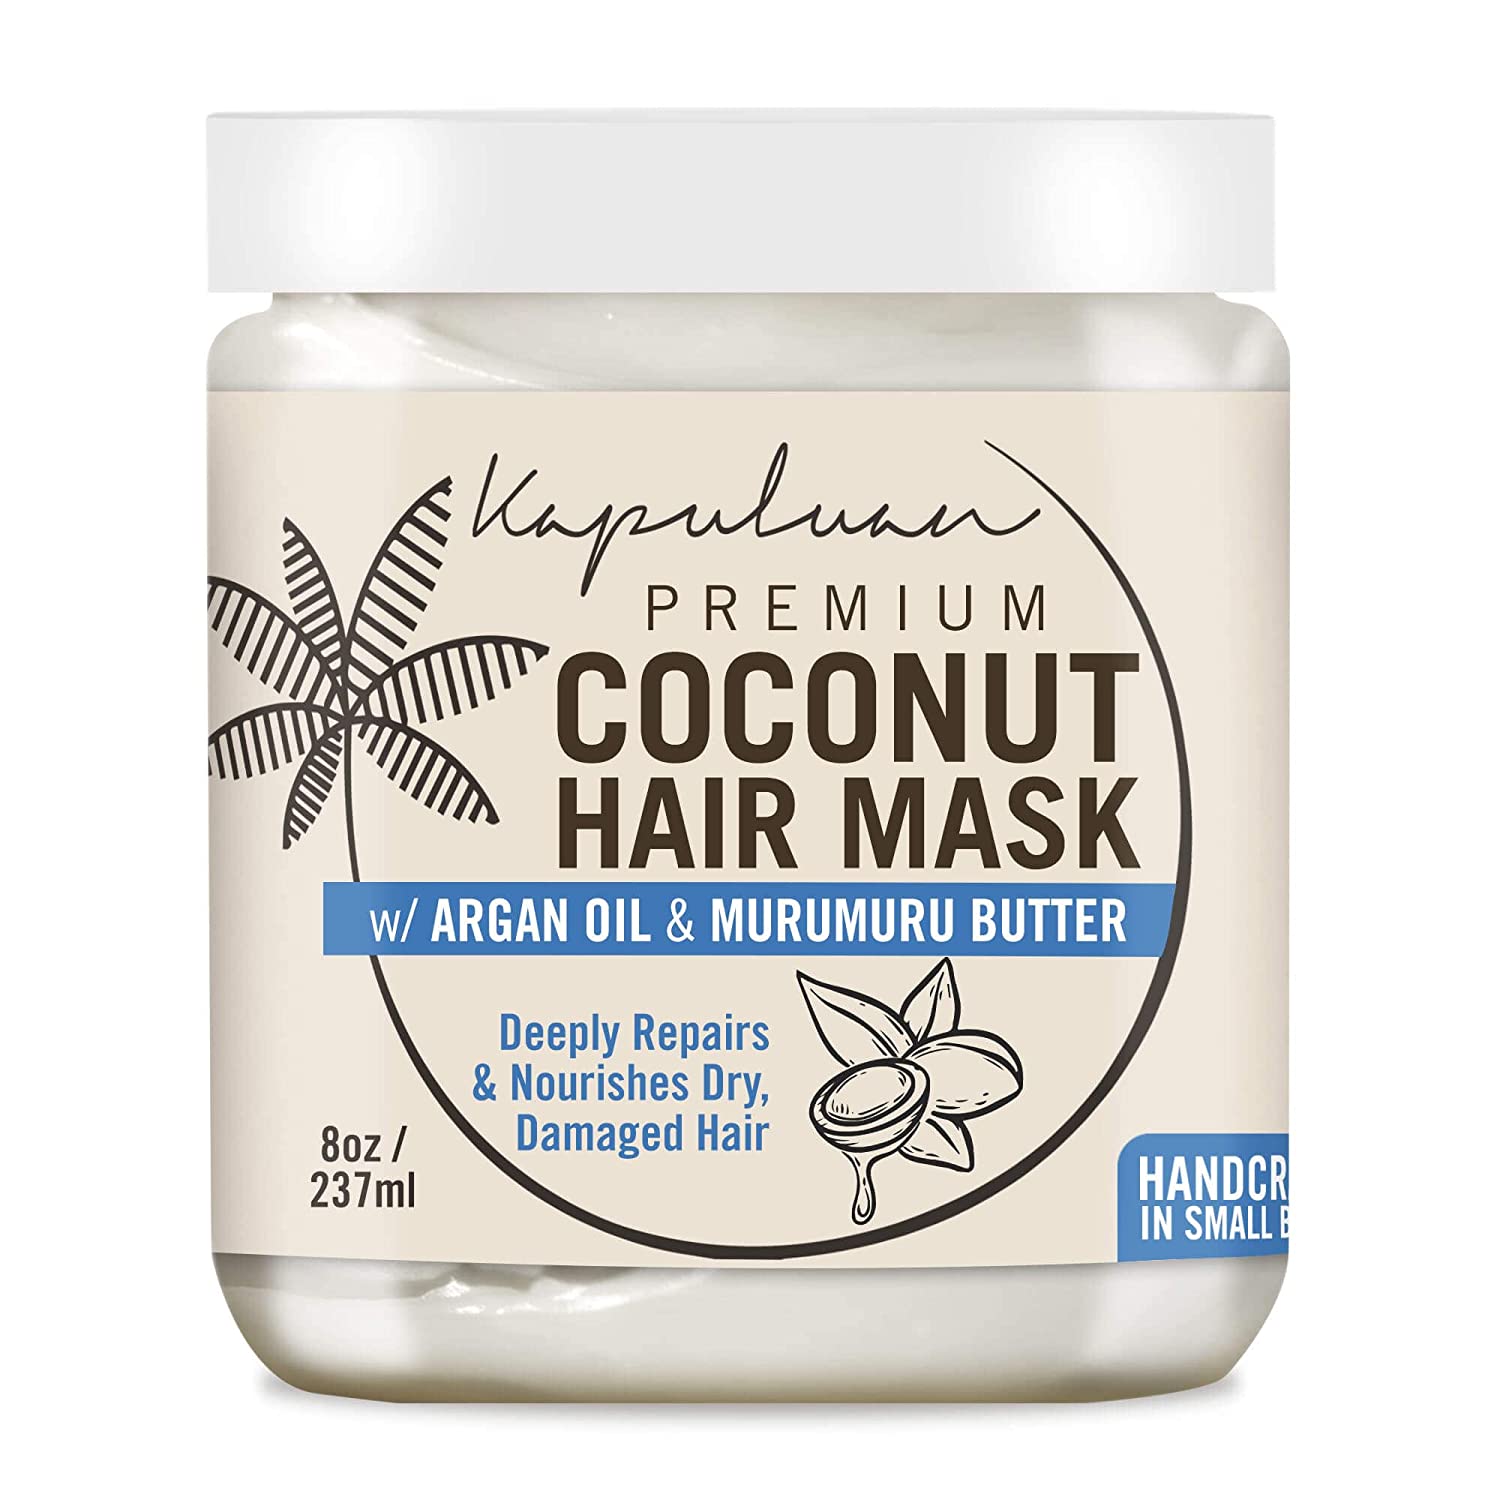 A jar of kapuluan premium coconut hair mask with argan oil and murumuru butter, designed to deeply repair and nourish dry, damaged hair. (8 oz / 237 ml).